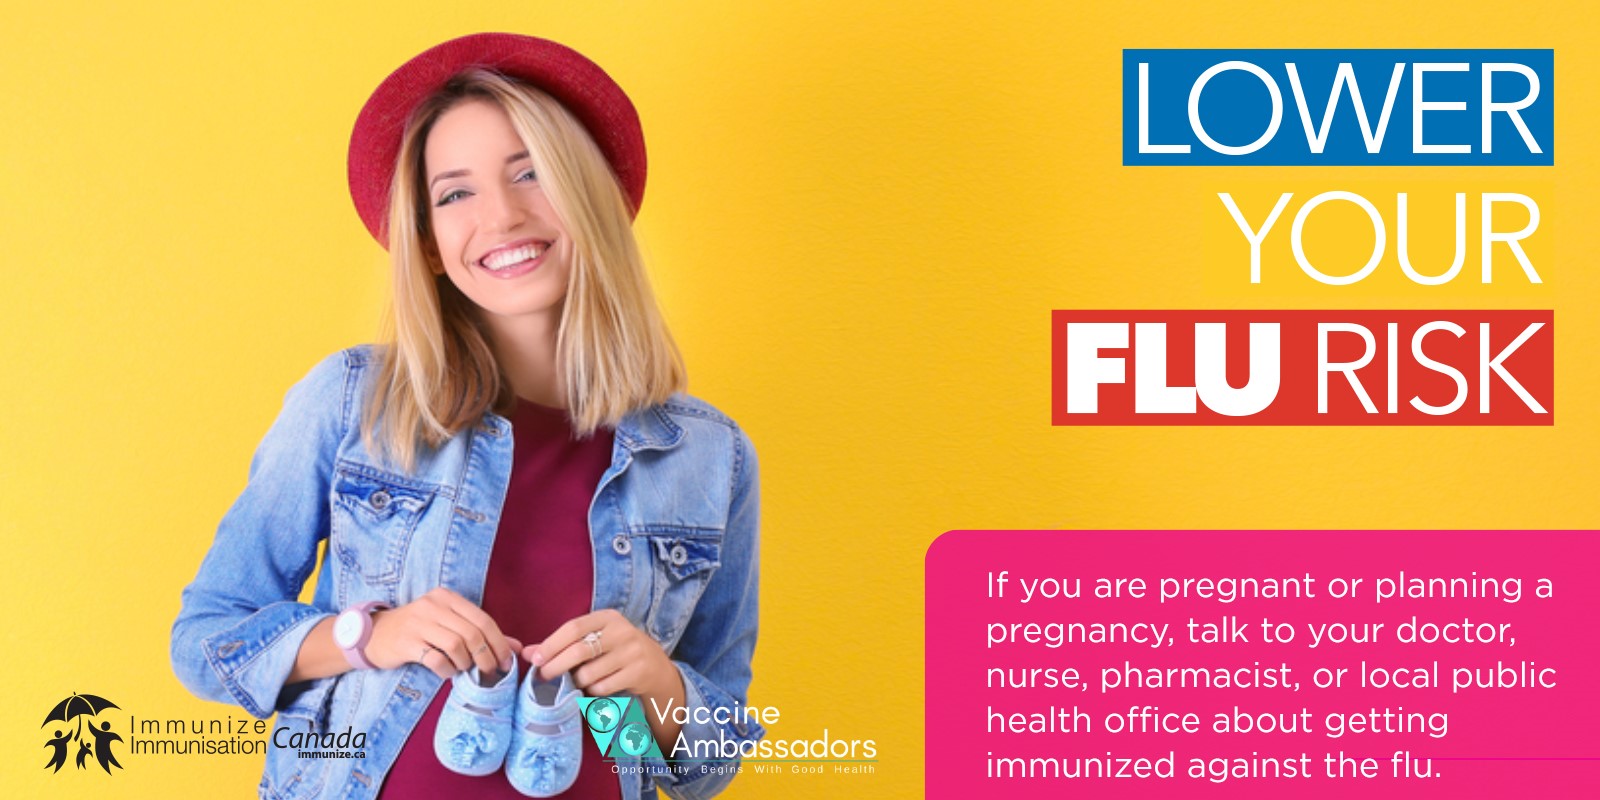 Lower your flu risk - pregnancy